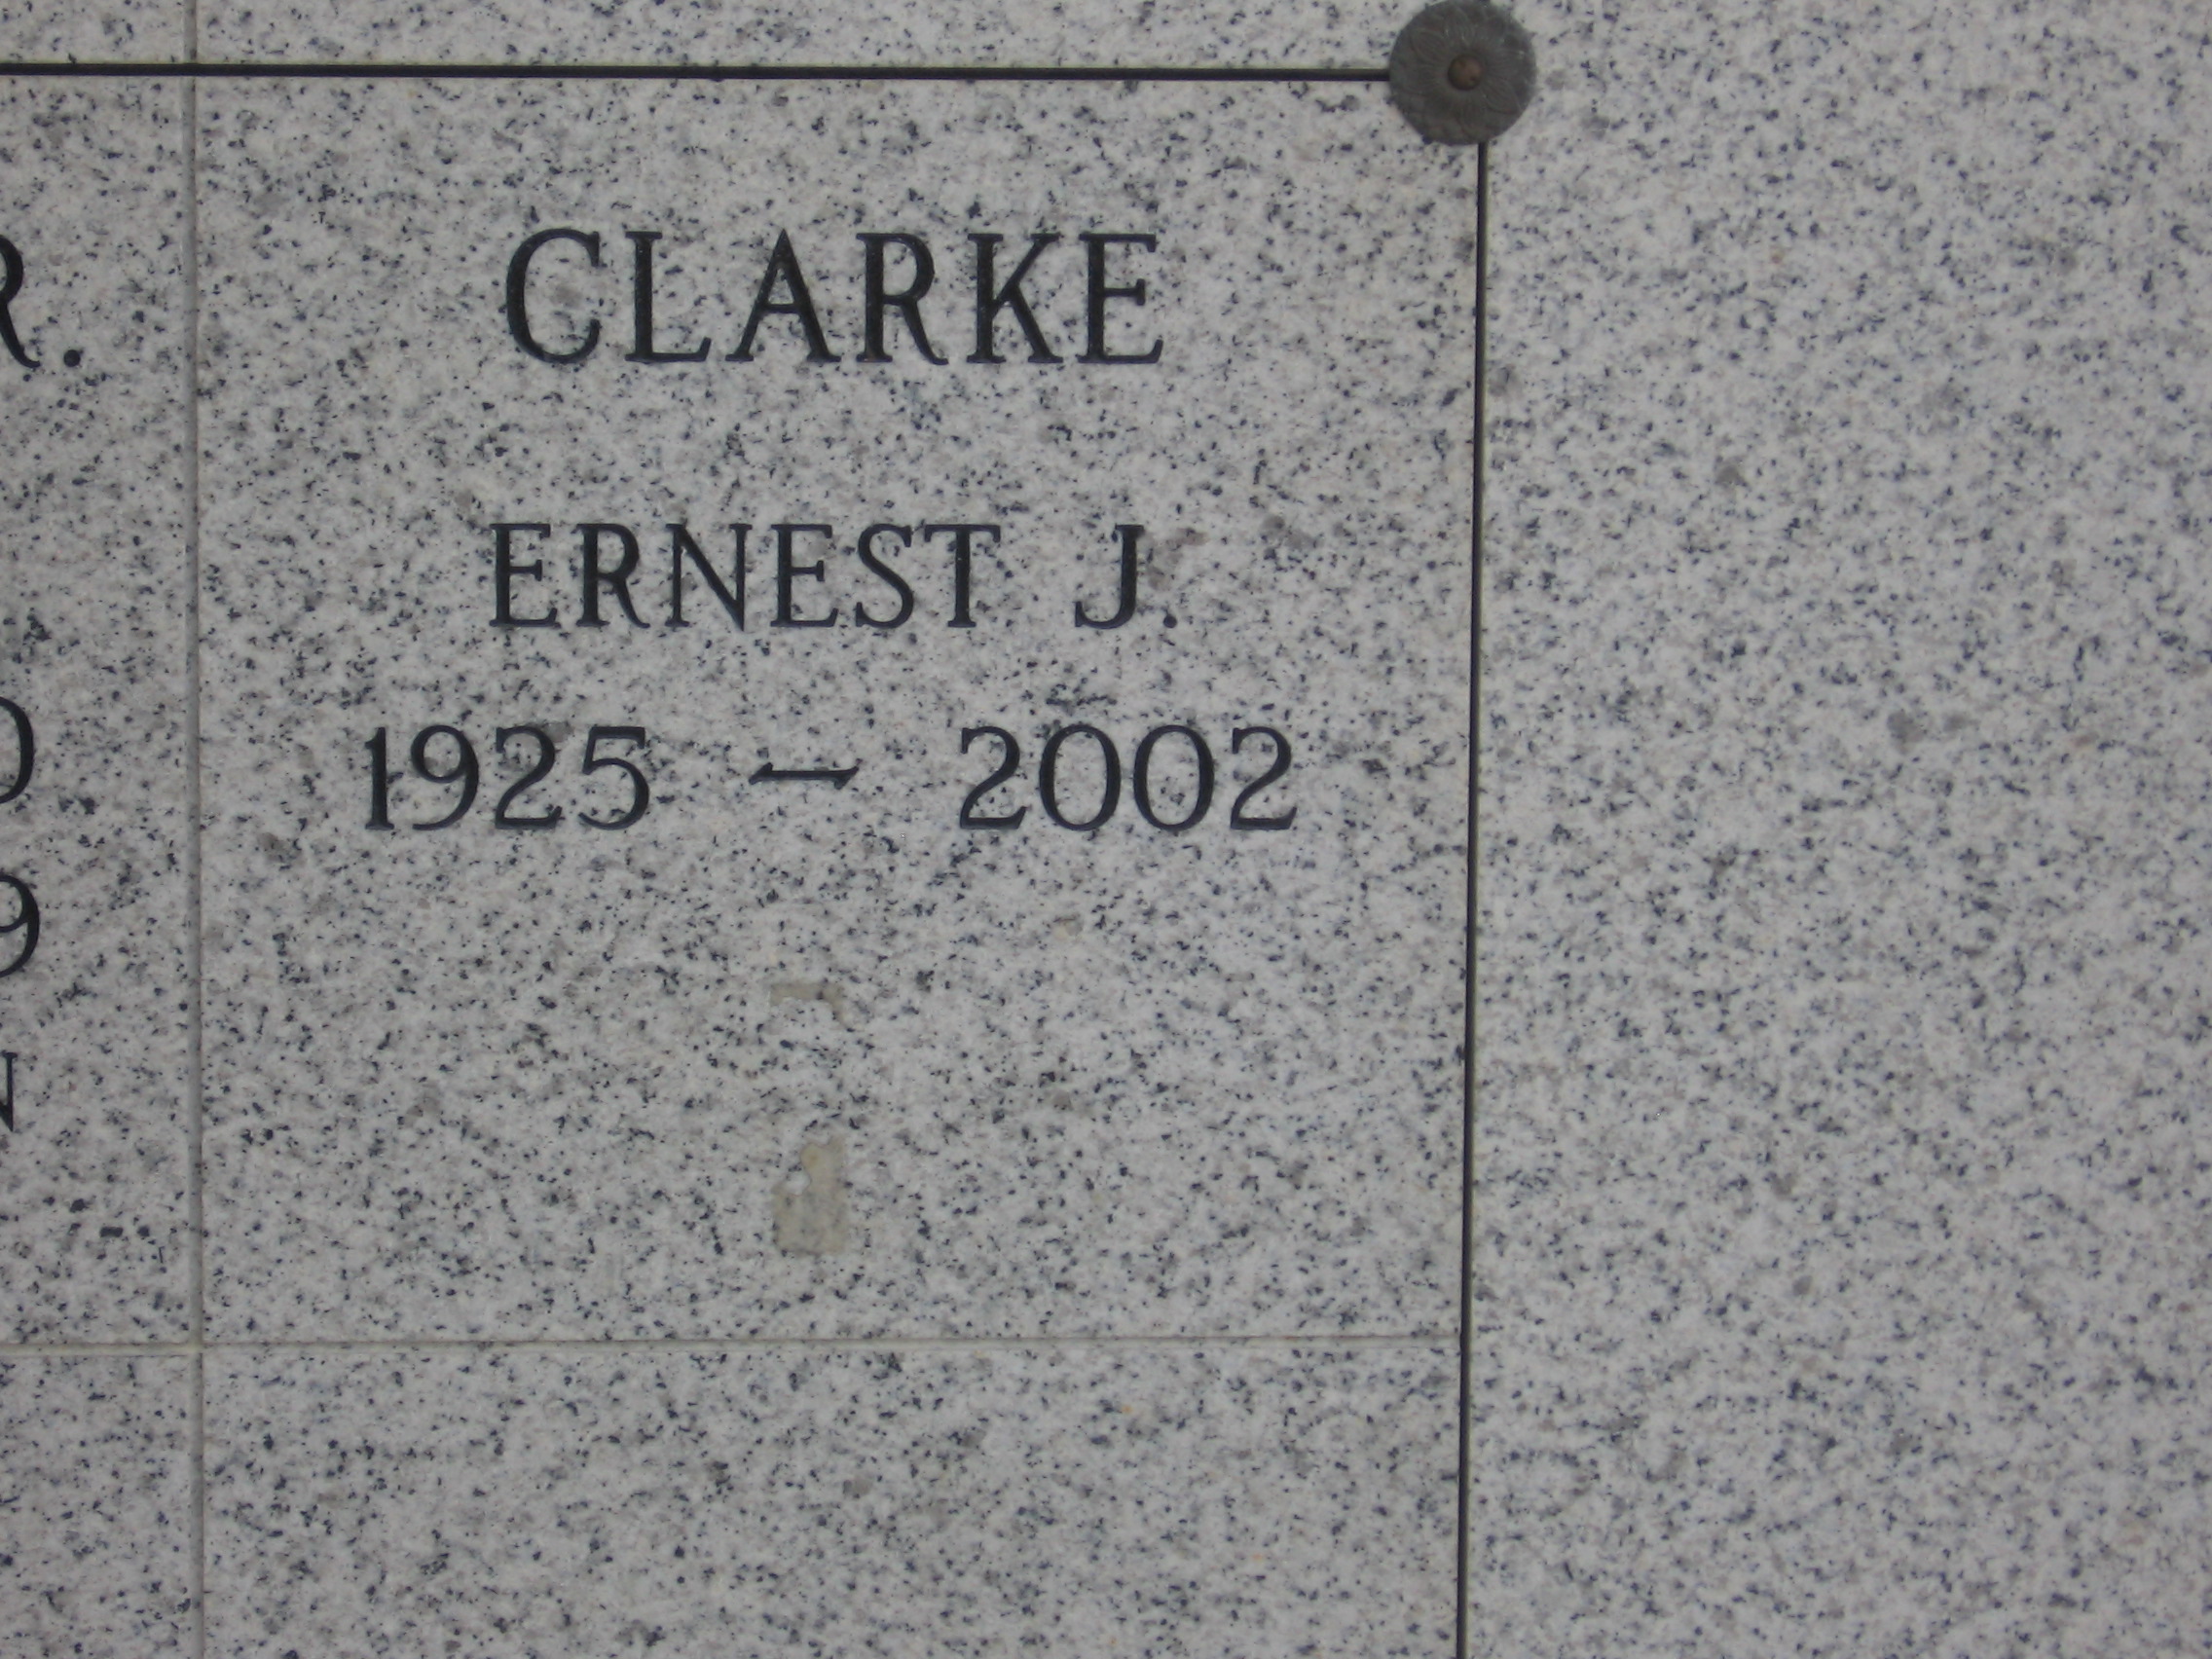 Ernest J Clarke